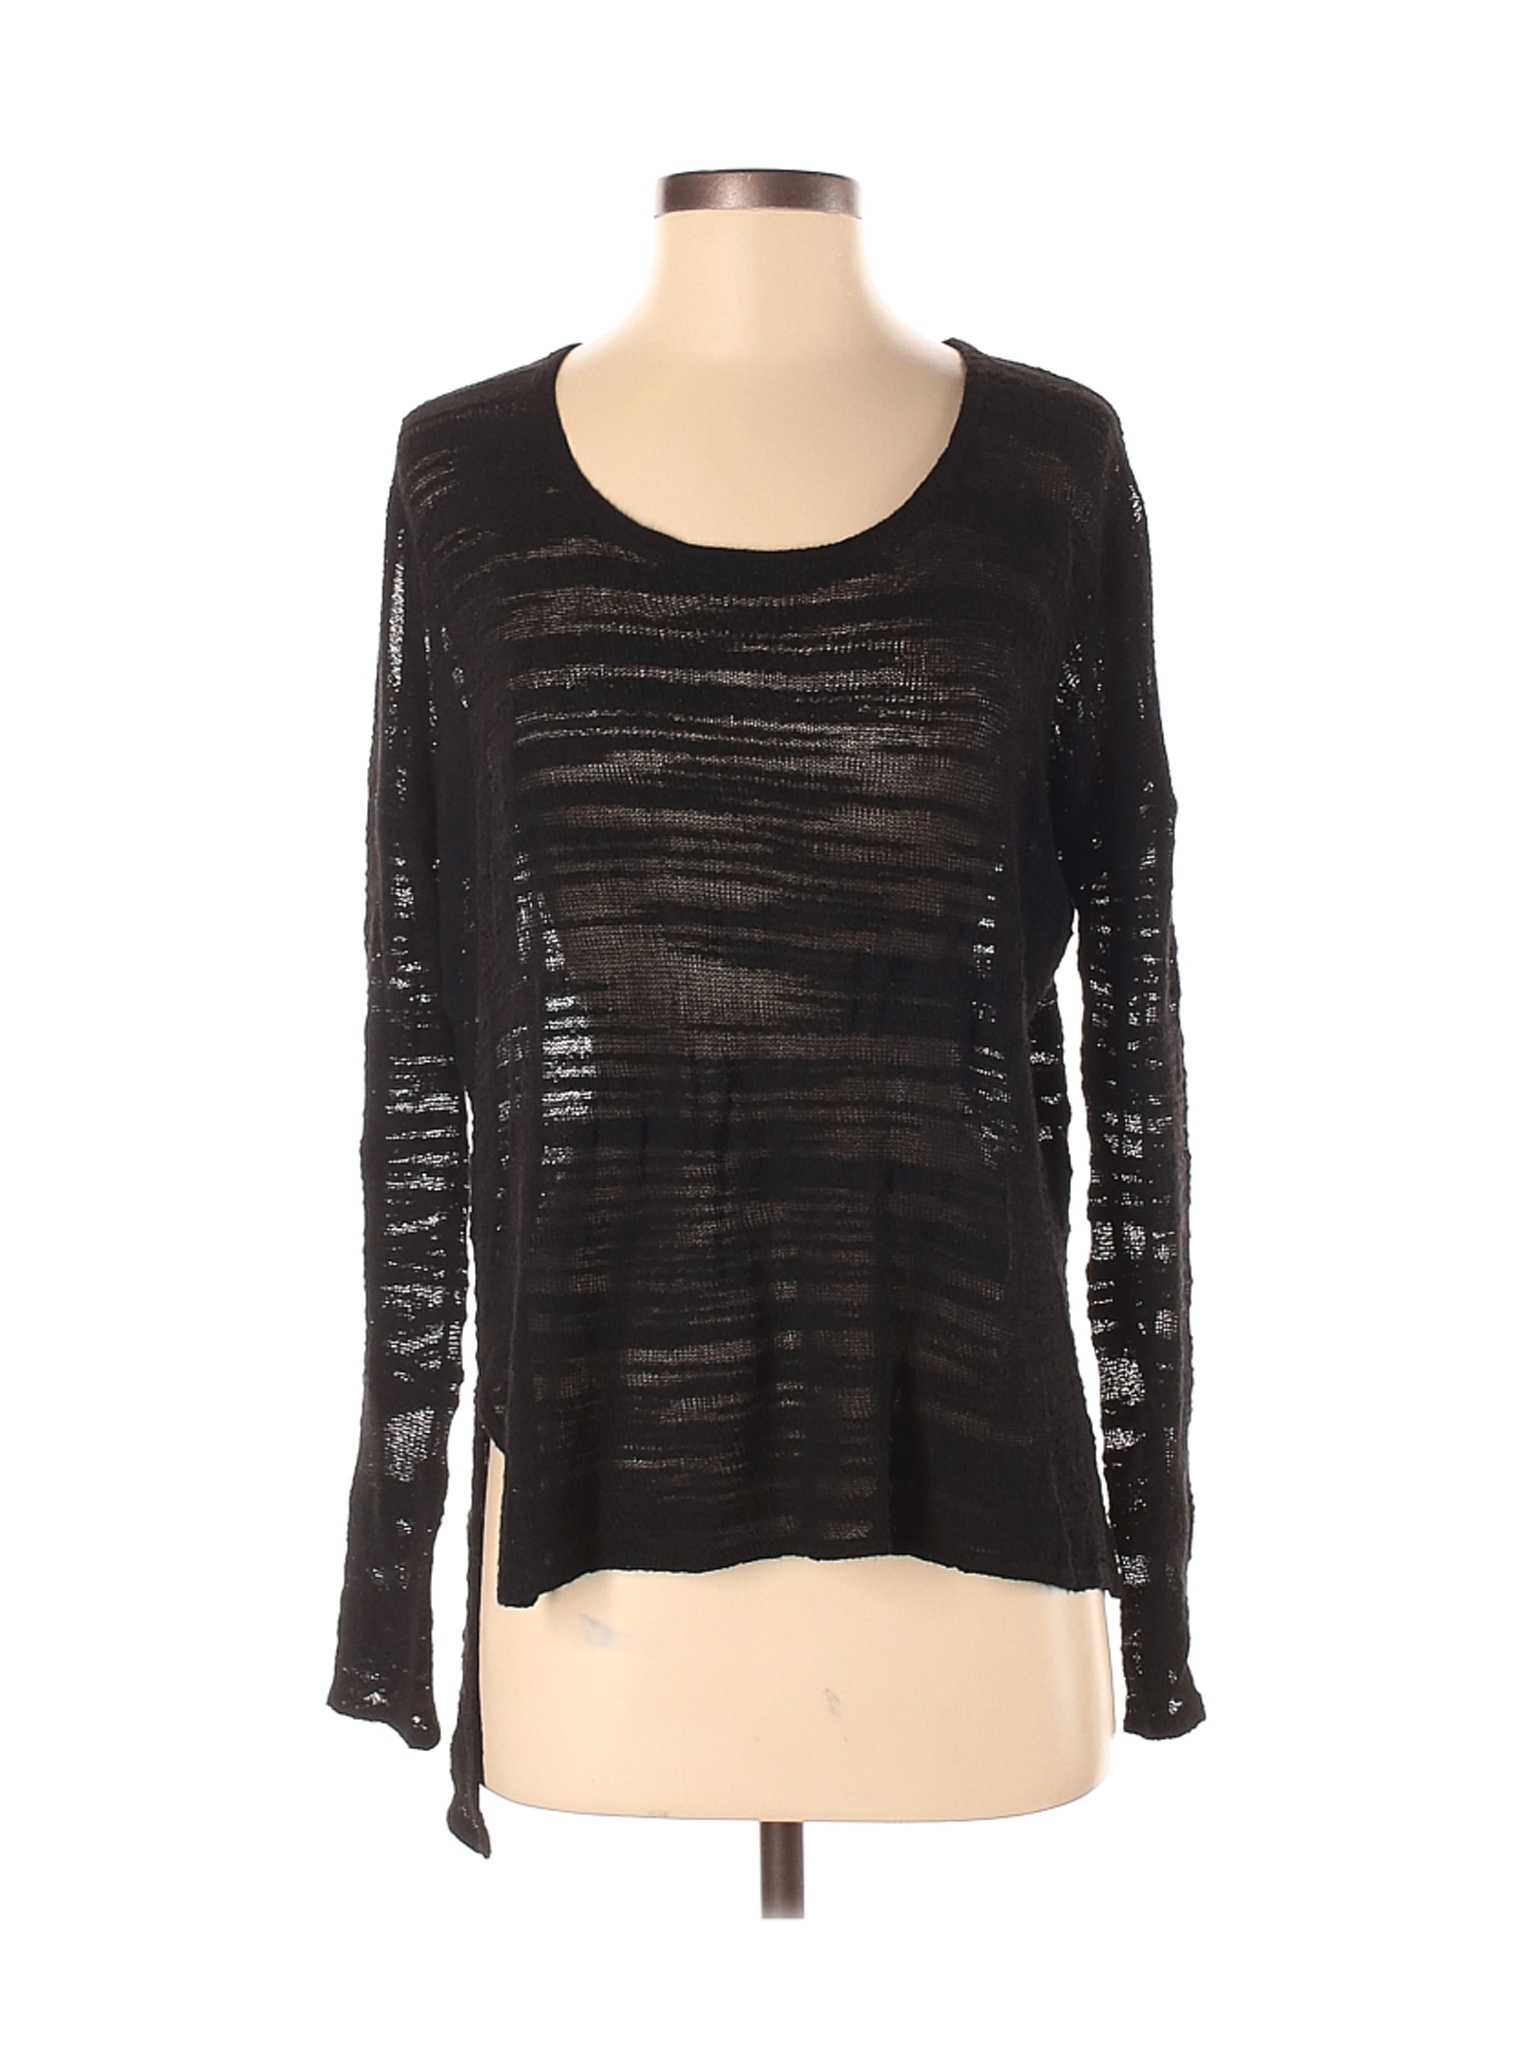 HELMUT Helmut Lang Women Black Long Sleeve Top P | eBay